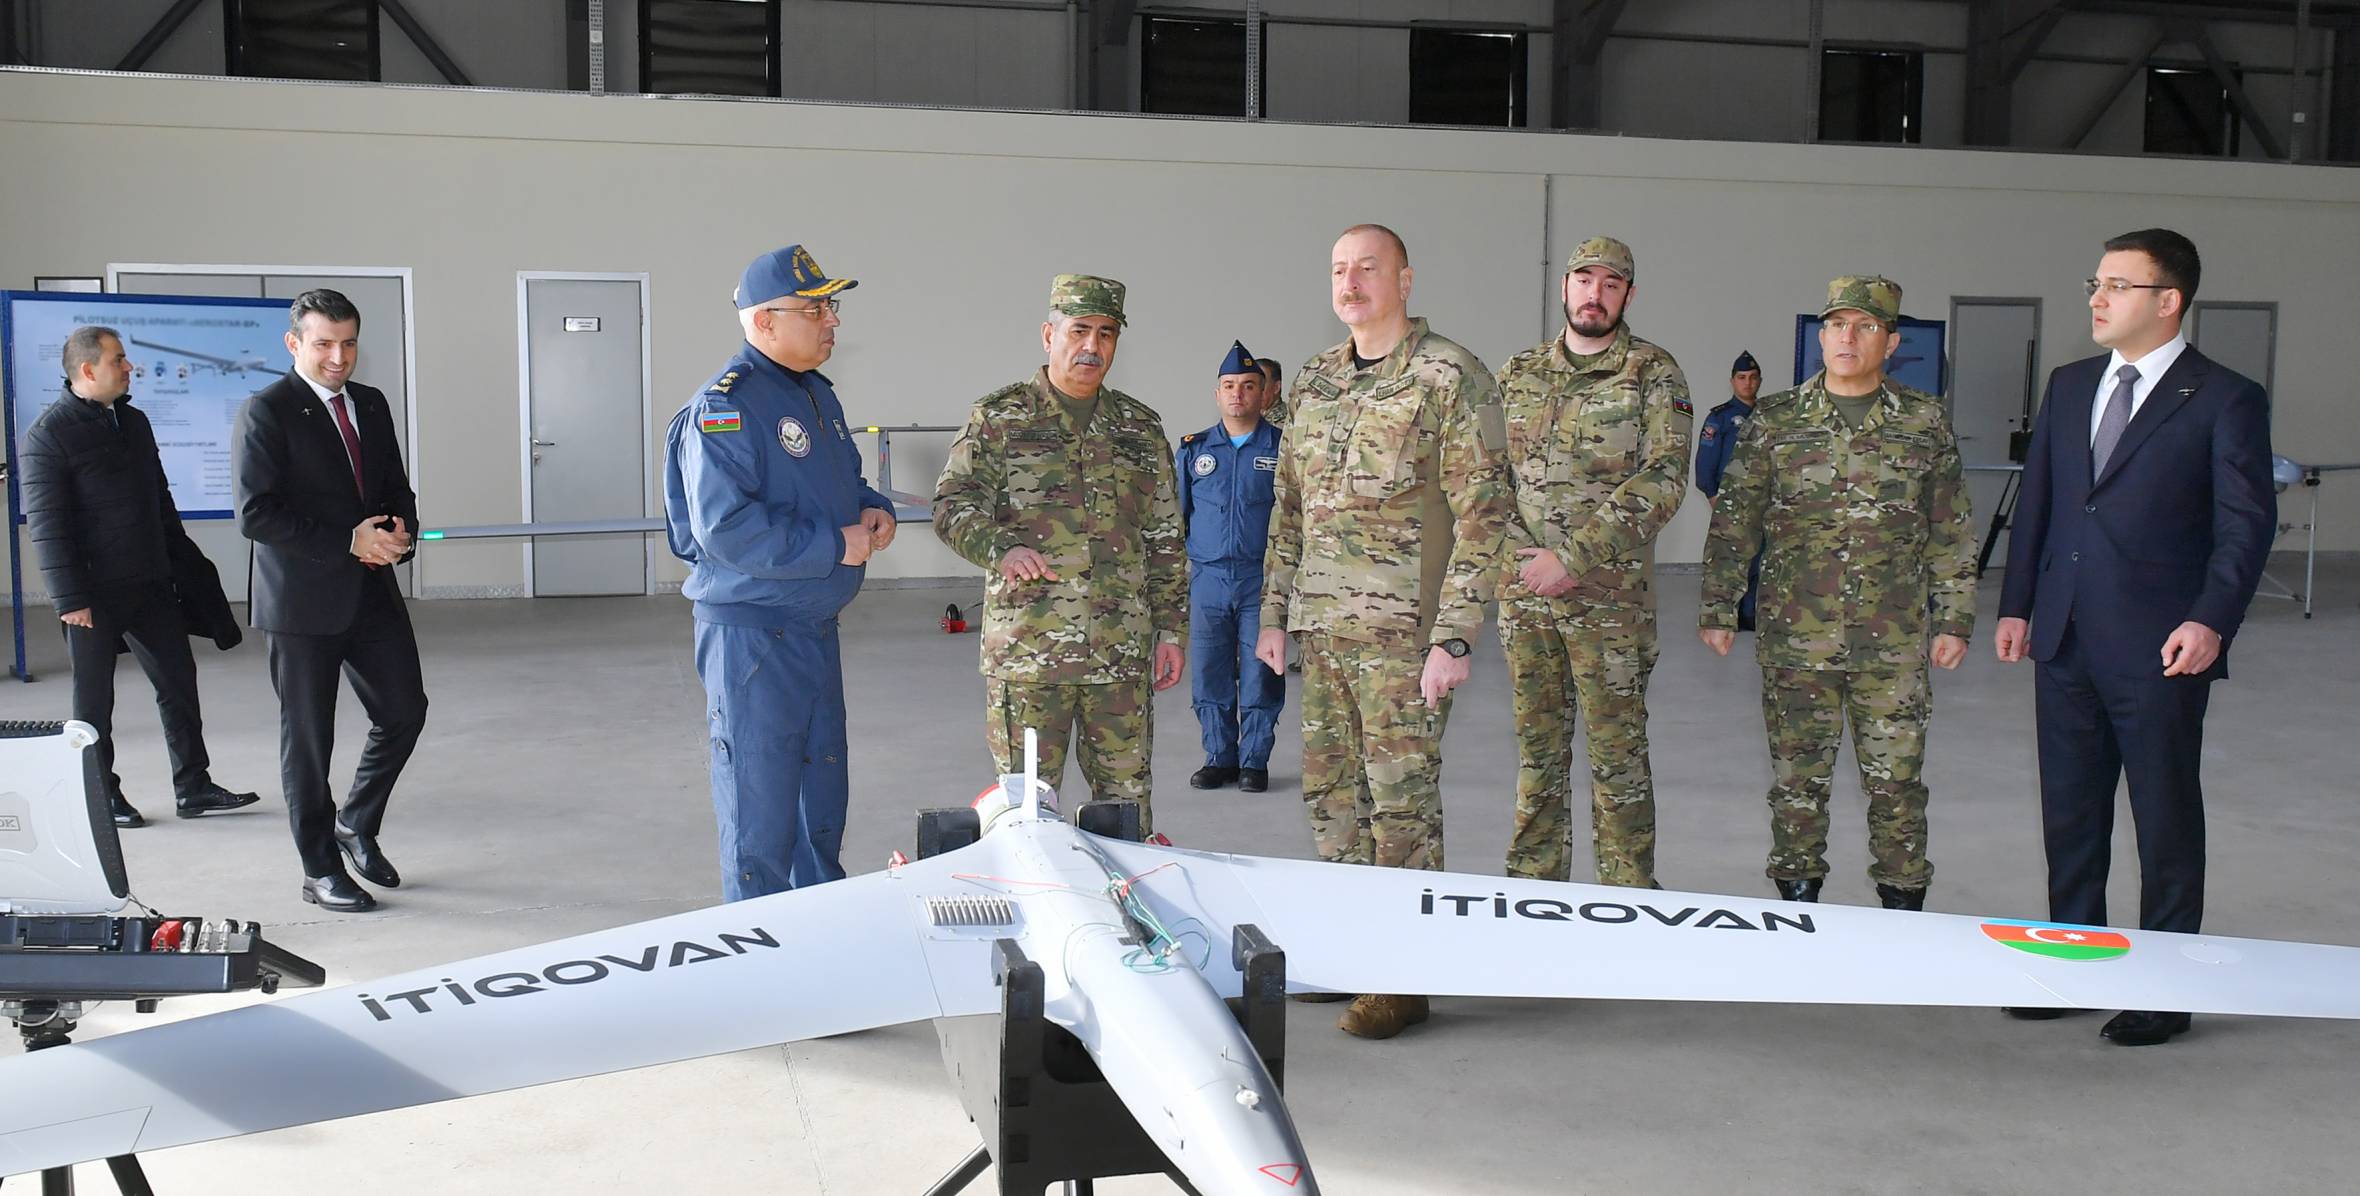 Ilham Aliyev and his son Heydar Aliyev visited Air Force military facilities